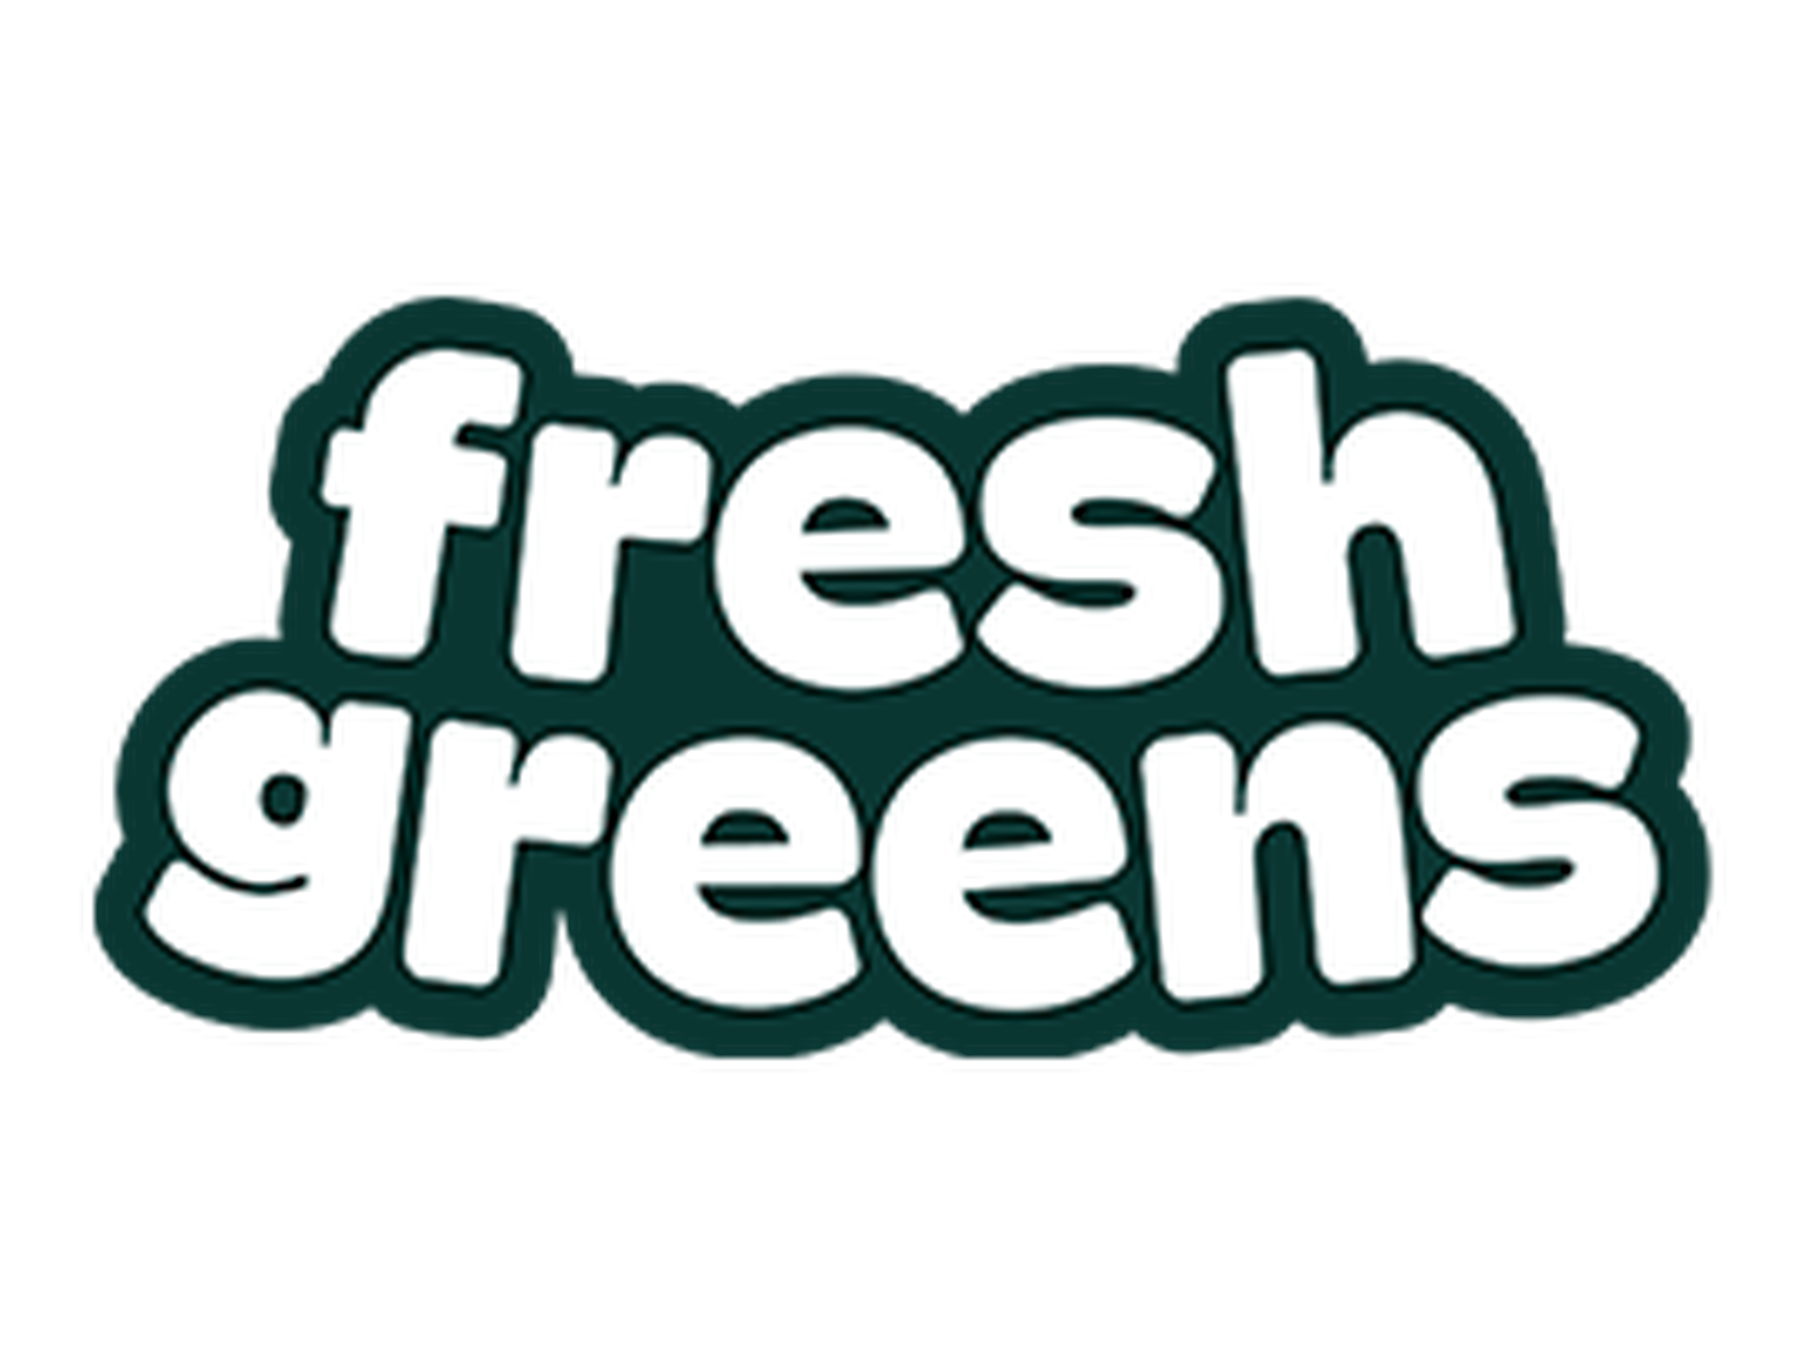 Código descuento Fresh Greens